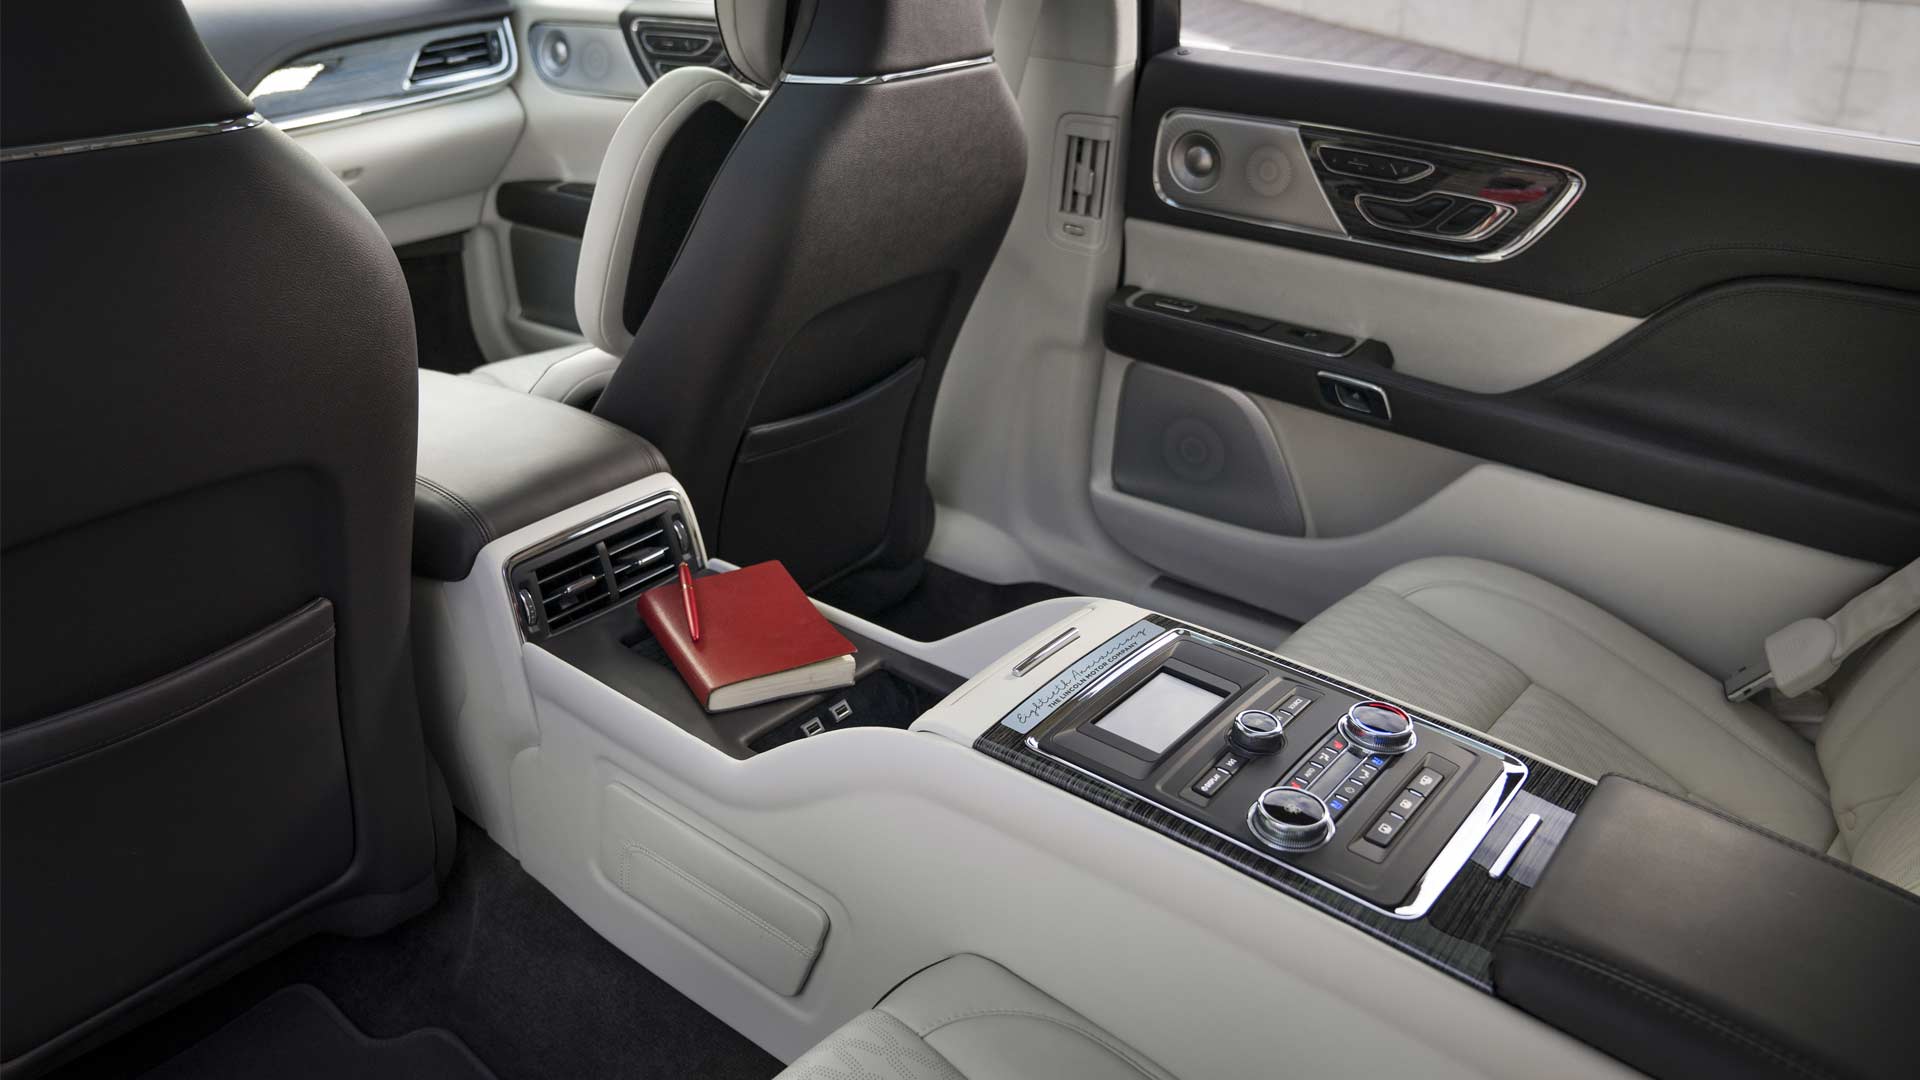 80th-Anniversary-Coach-Door-Lincoln-Continental-interior_3